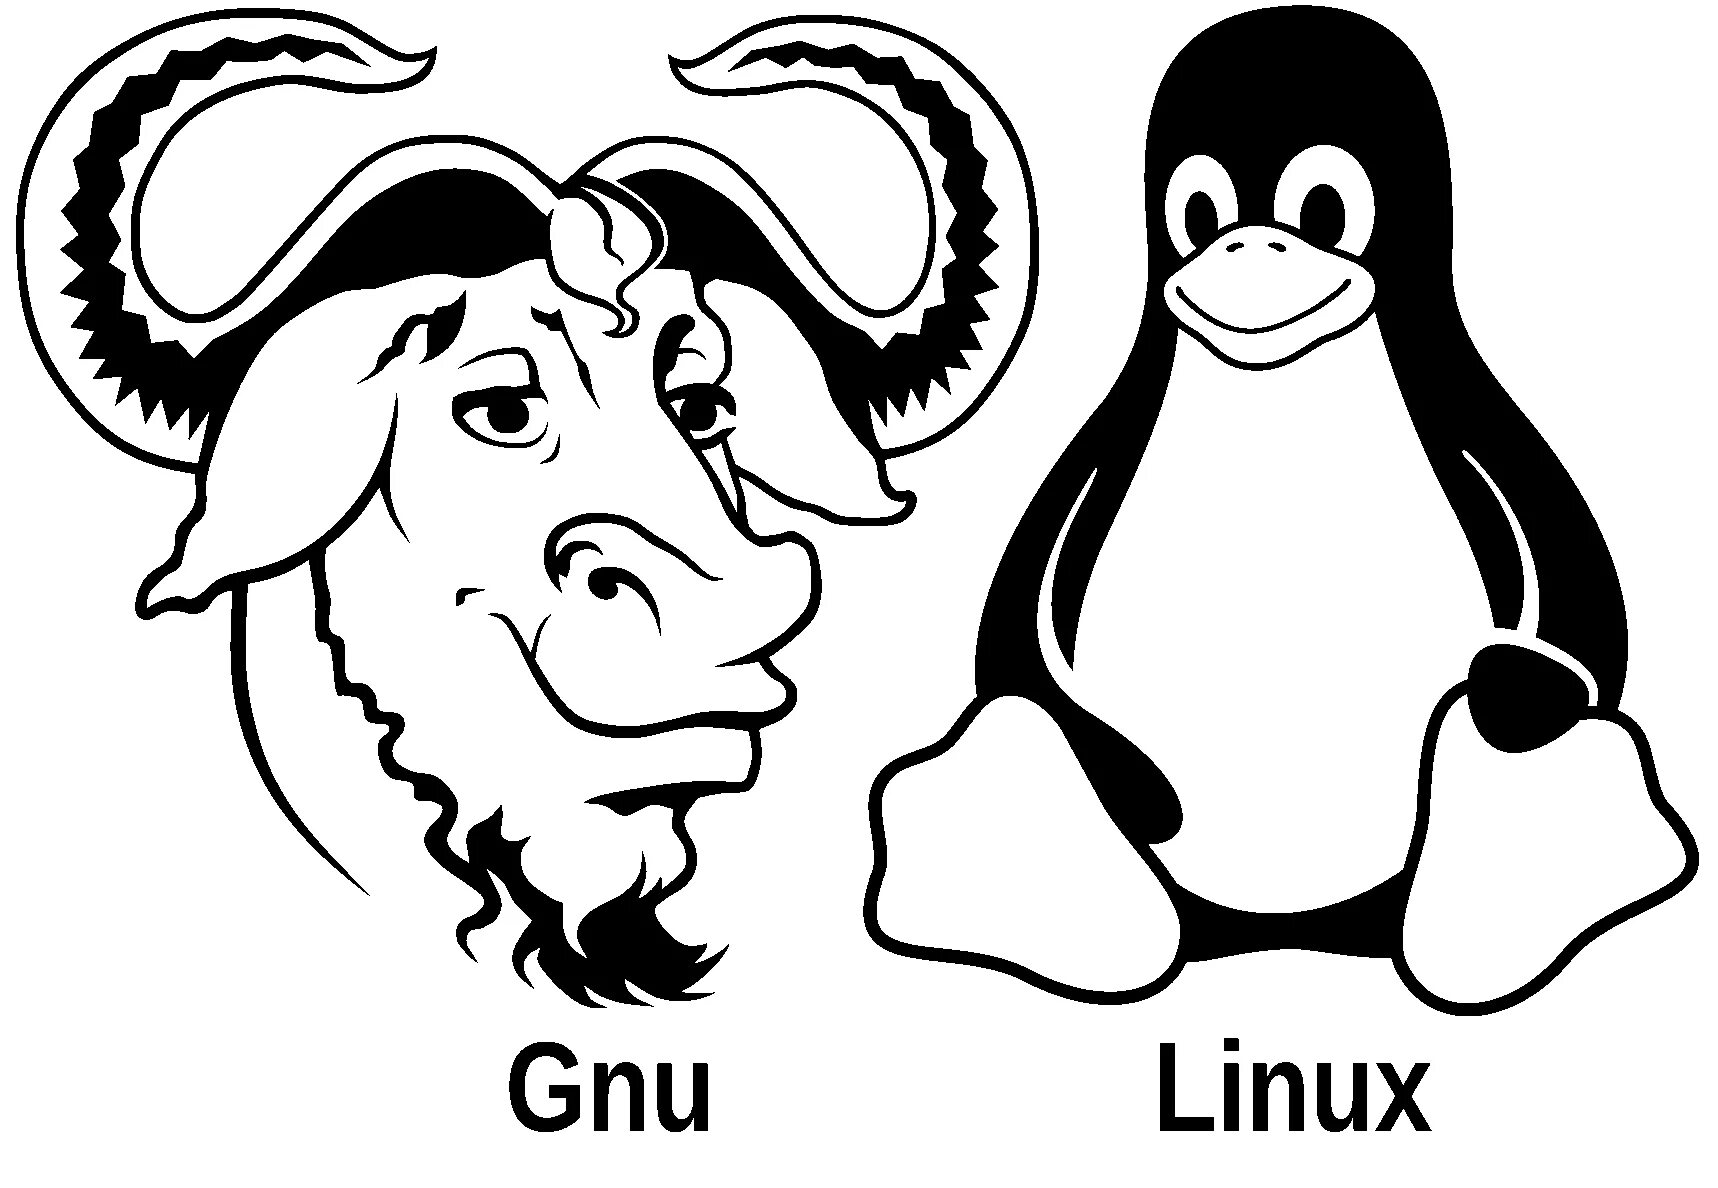 Gnu license. GNU линукс. GNU логотип. GNU Операционная система. Проект GNU.